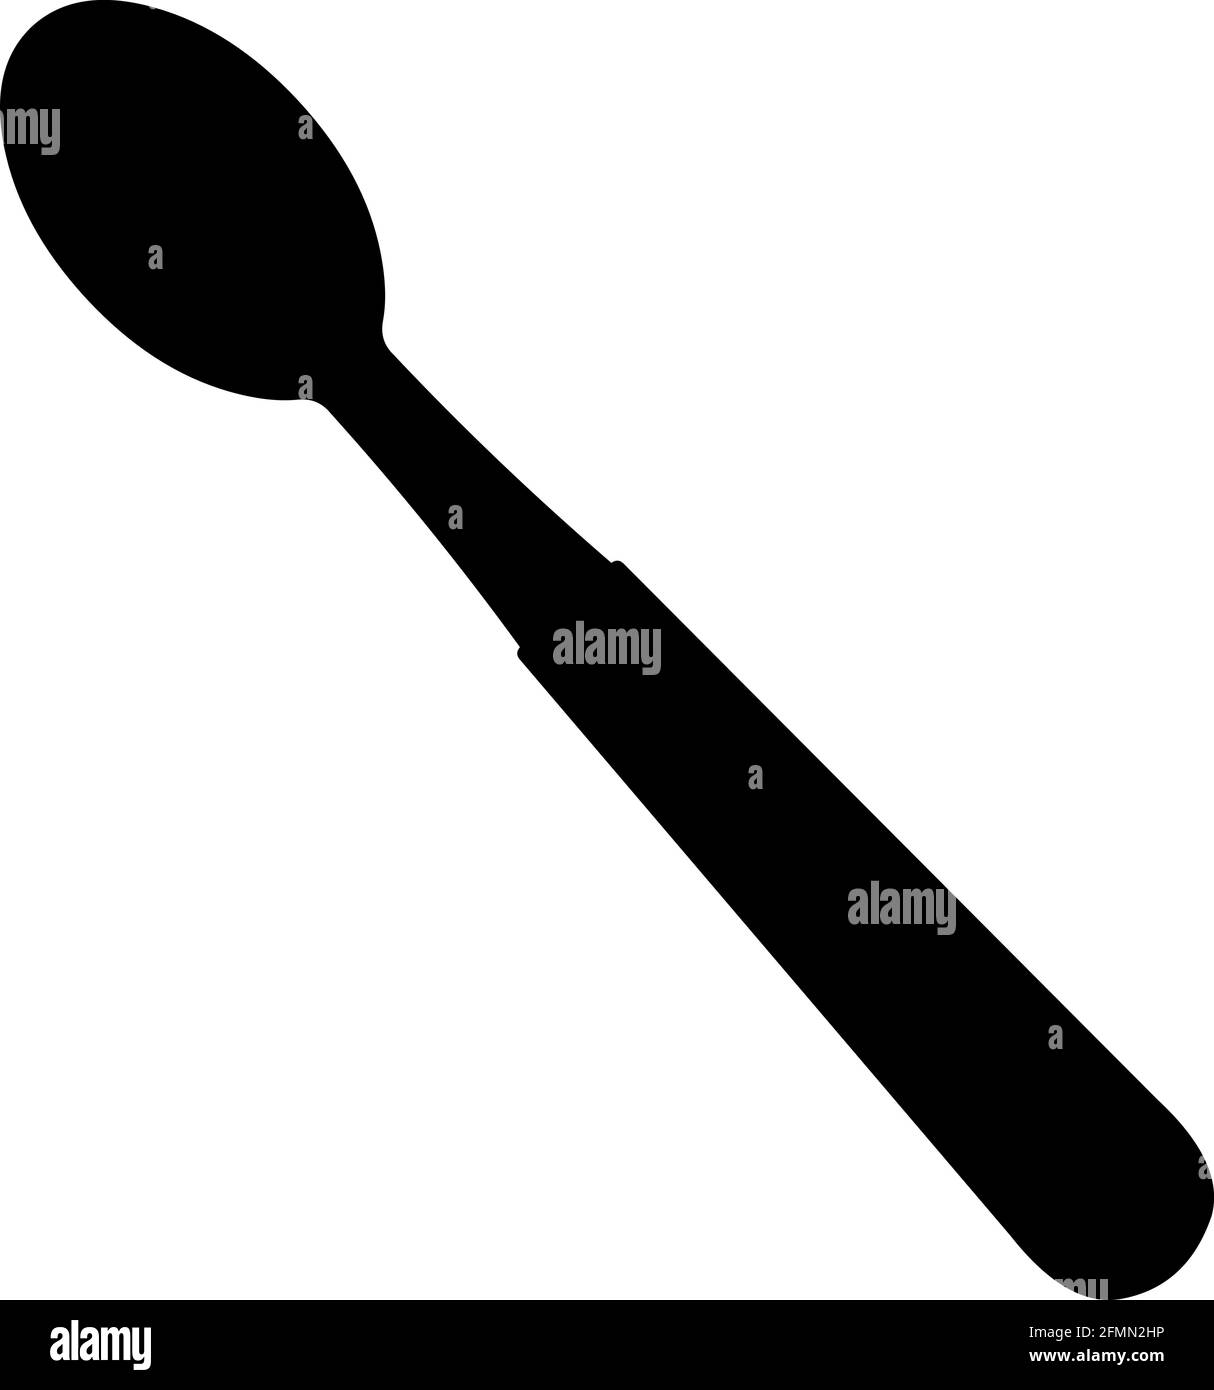 Vector illustration of black silhouette of a teaspoon Stock Vector